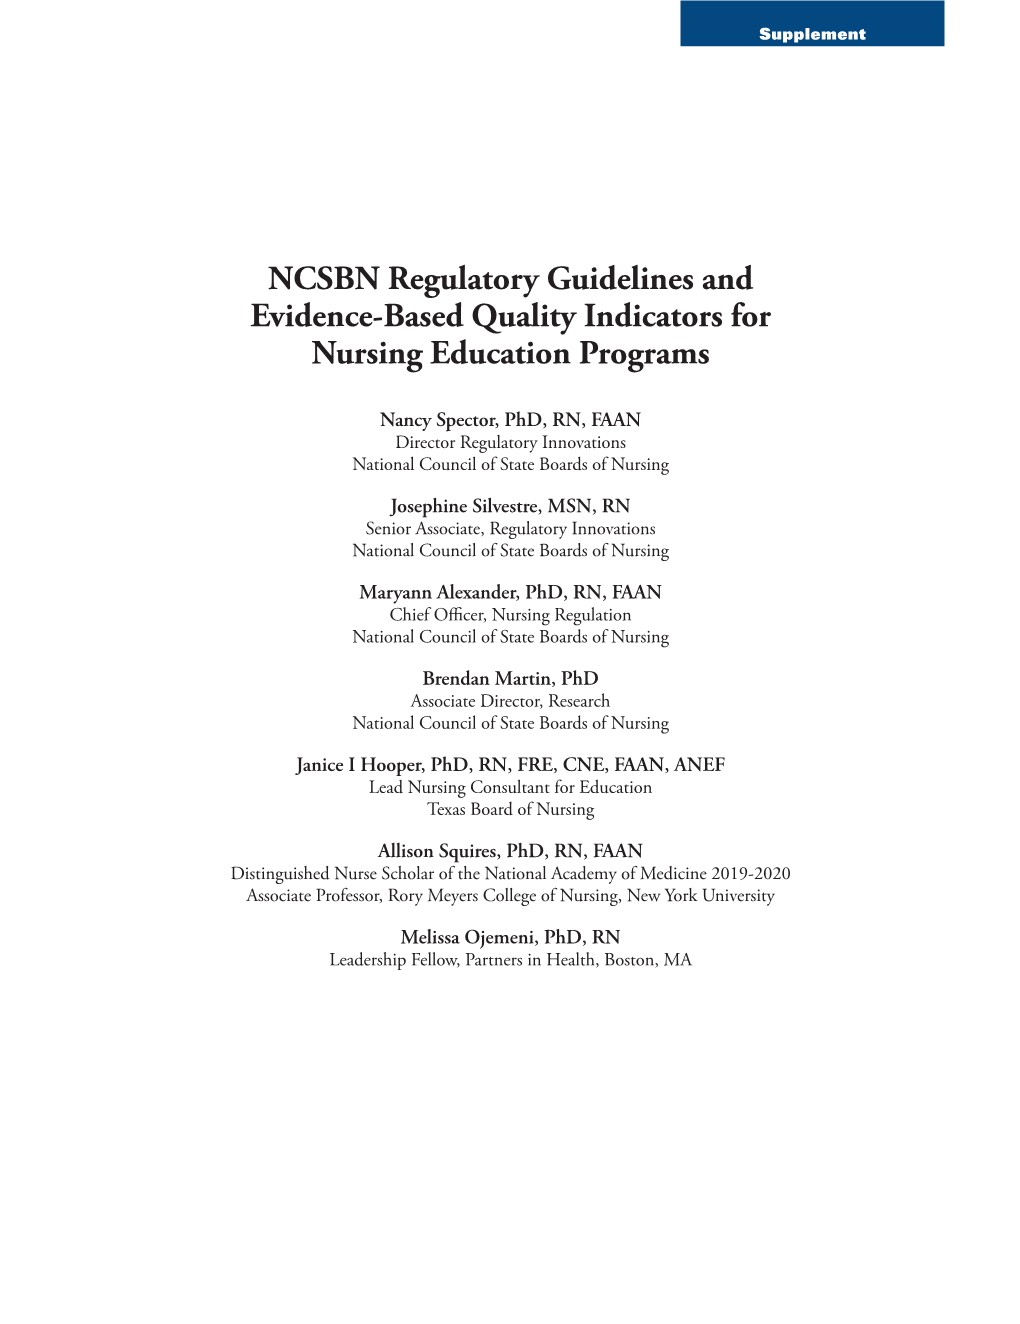 NCSBN Regulatory Guidelines and Evidence-Based Quality Indicators for Nursing Education Programs